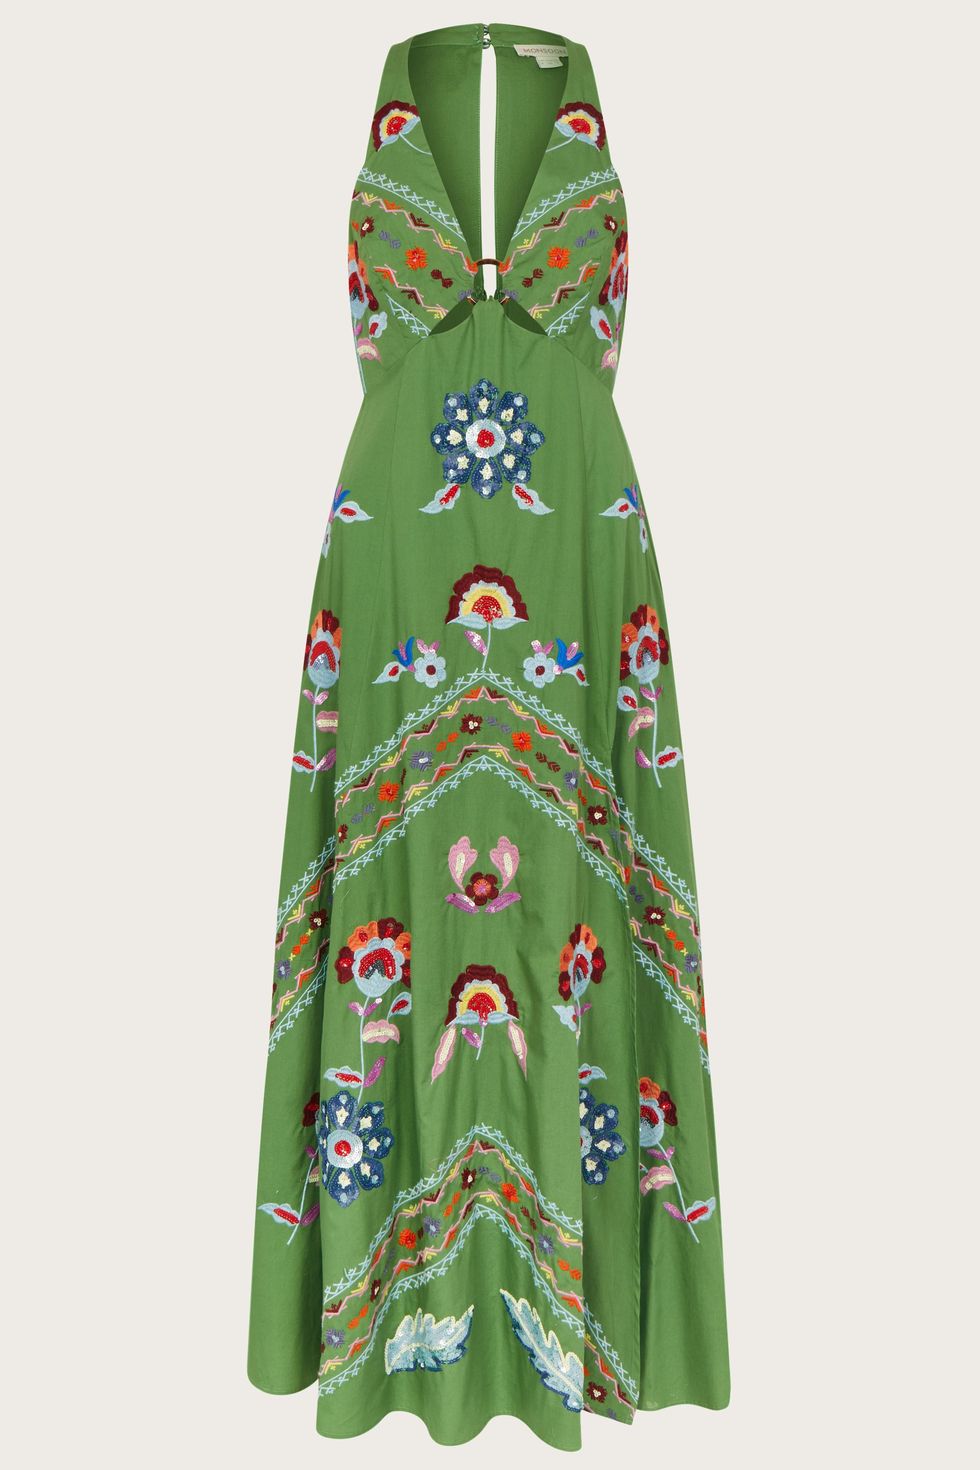 Shirley Ring Detail Embellished Maxi Dress